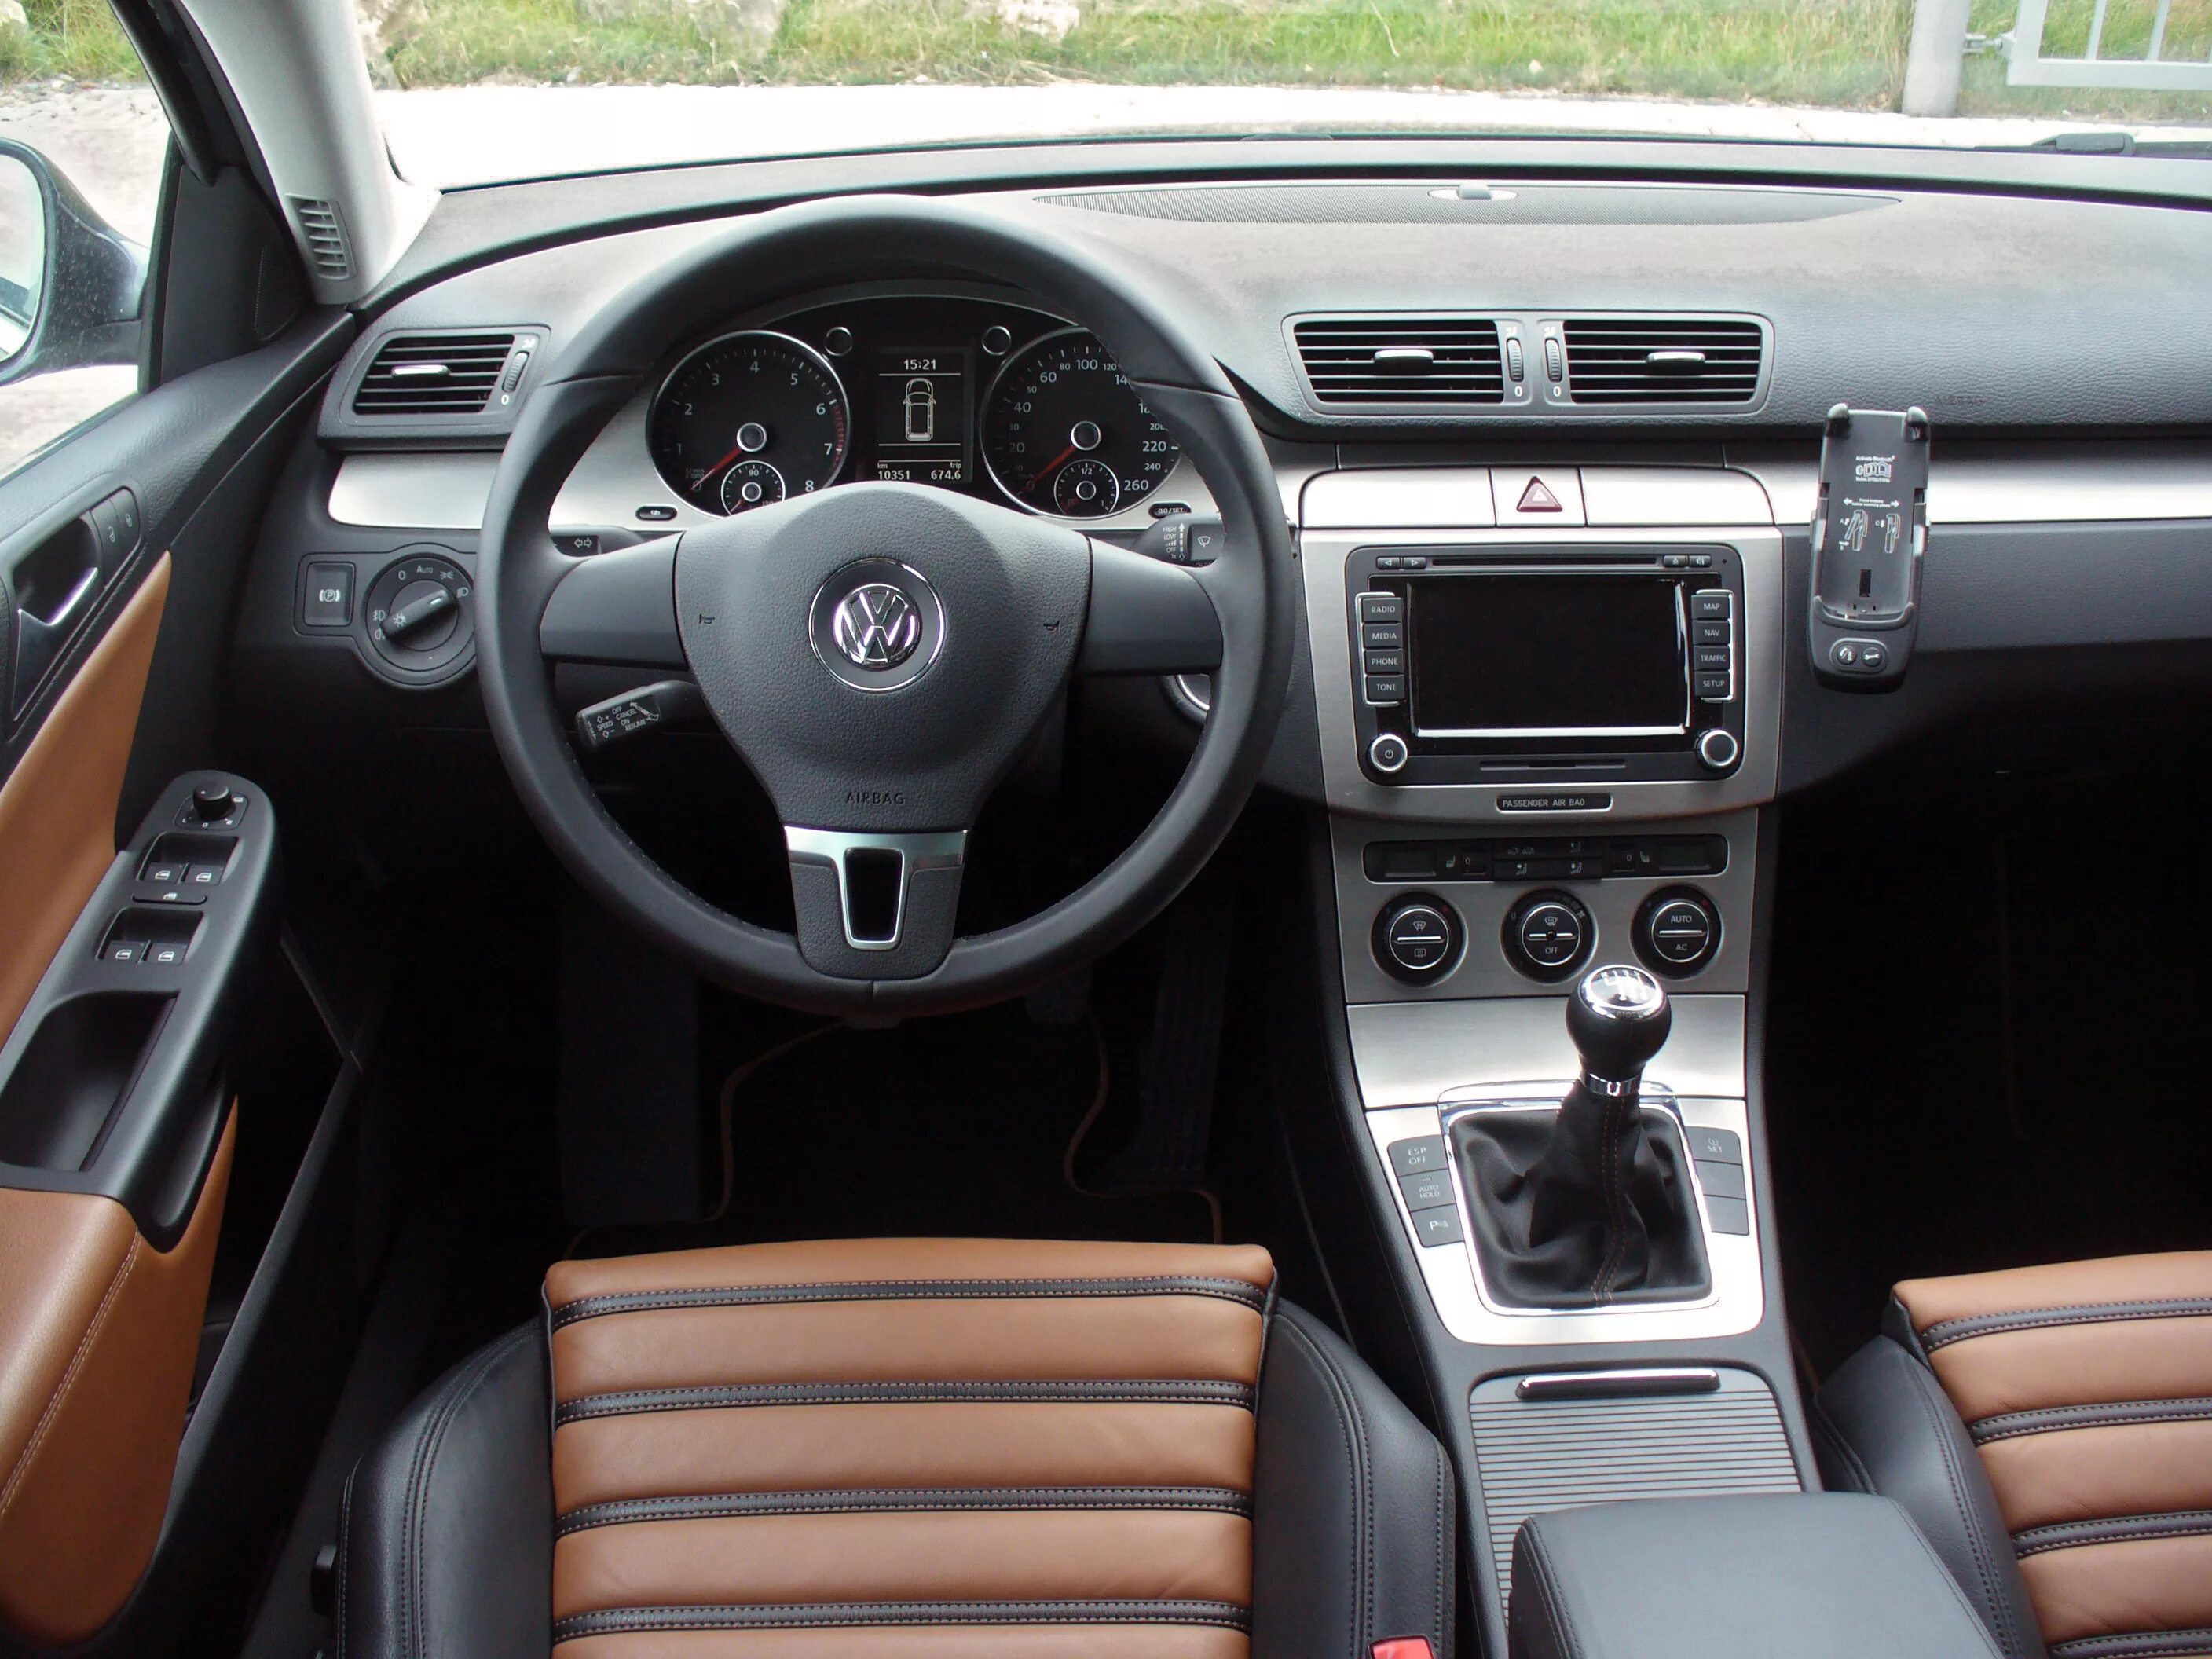 Фольксваген Пассат b6 салон. Volkswagen Passat b6 Interior. Volkswagen Passat b6 салон. Фольксваген Пассат б6 2007 салон.